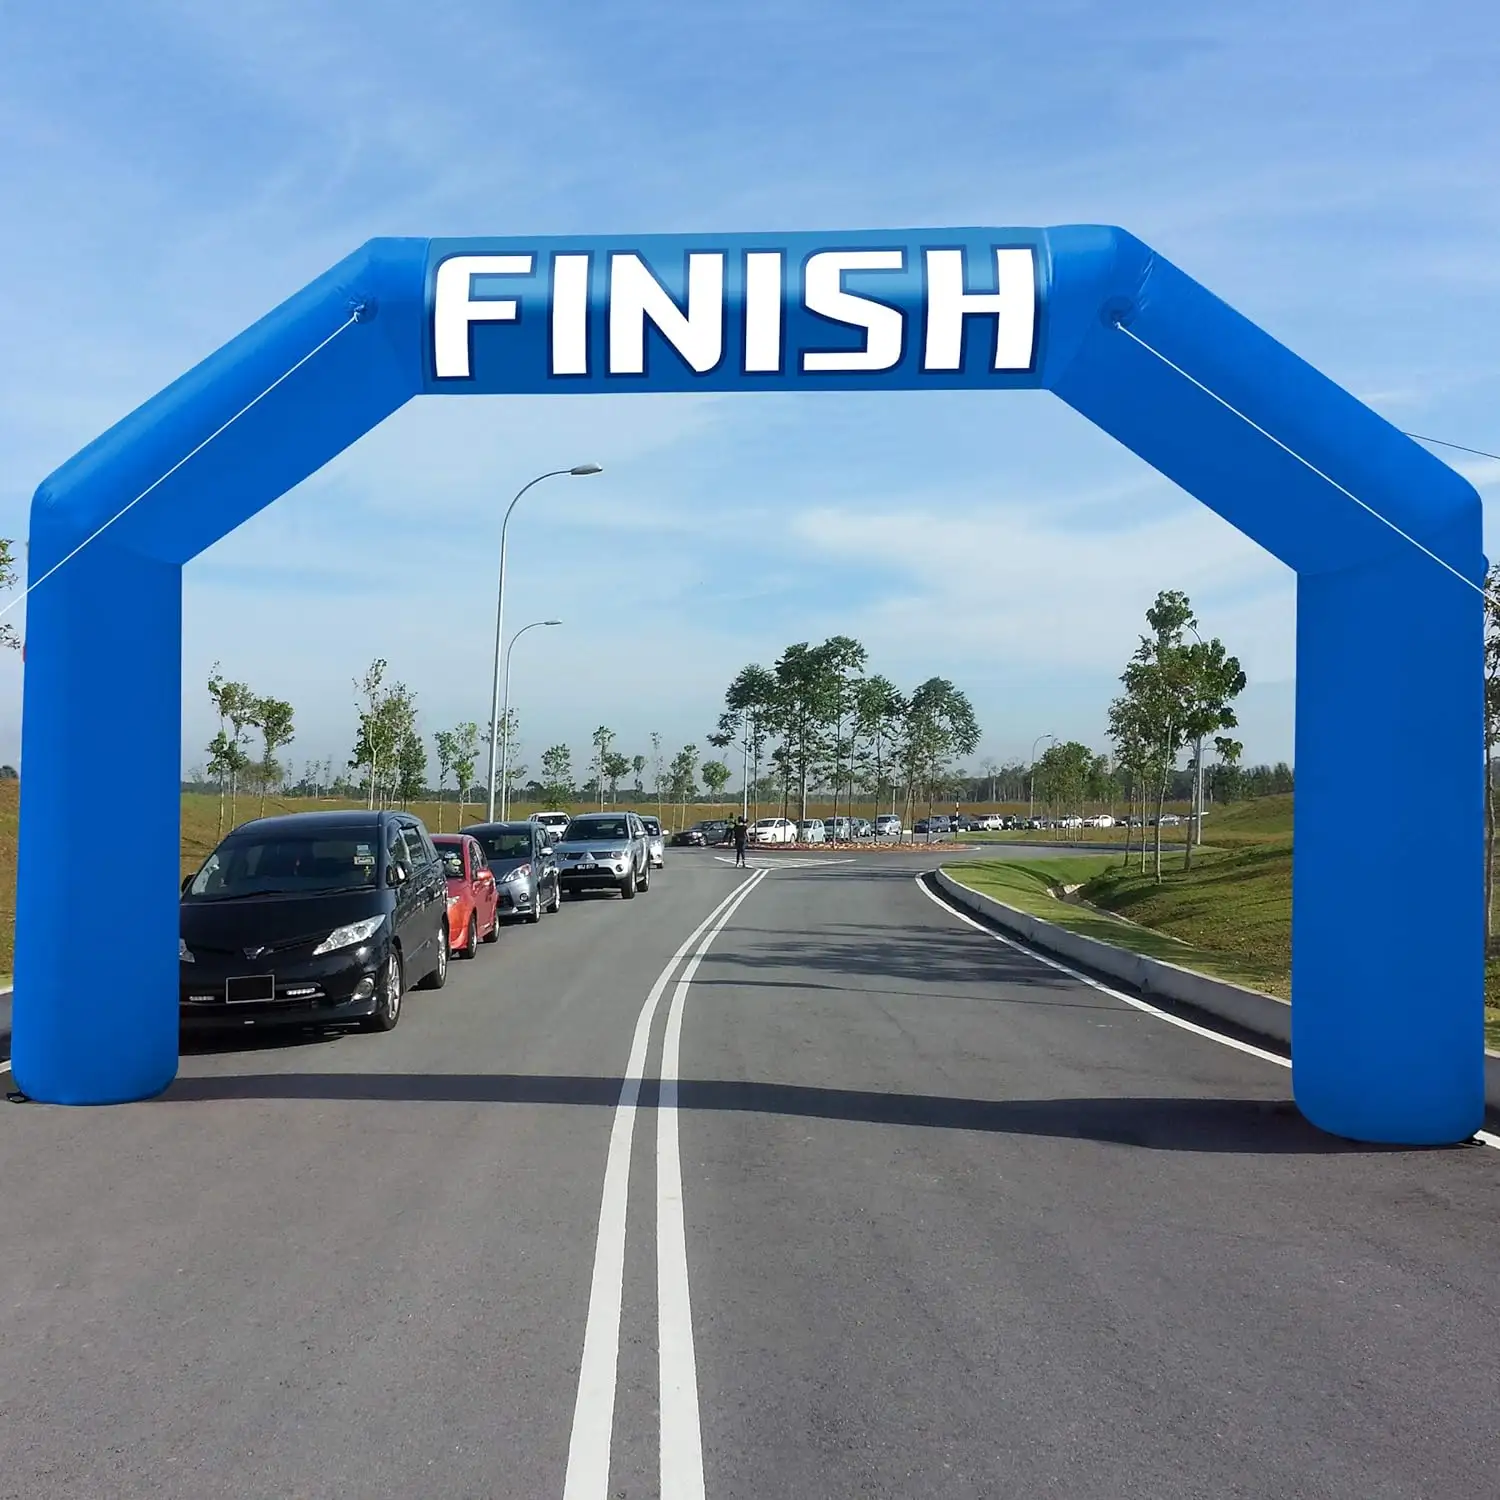 Waterdichte Opblaasbare Boog Start Welcome Finish Gate Race Opblaasbare Finishlijn Boog Lucht Marathon Opblaasbare Bogen